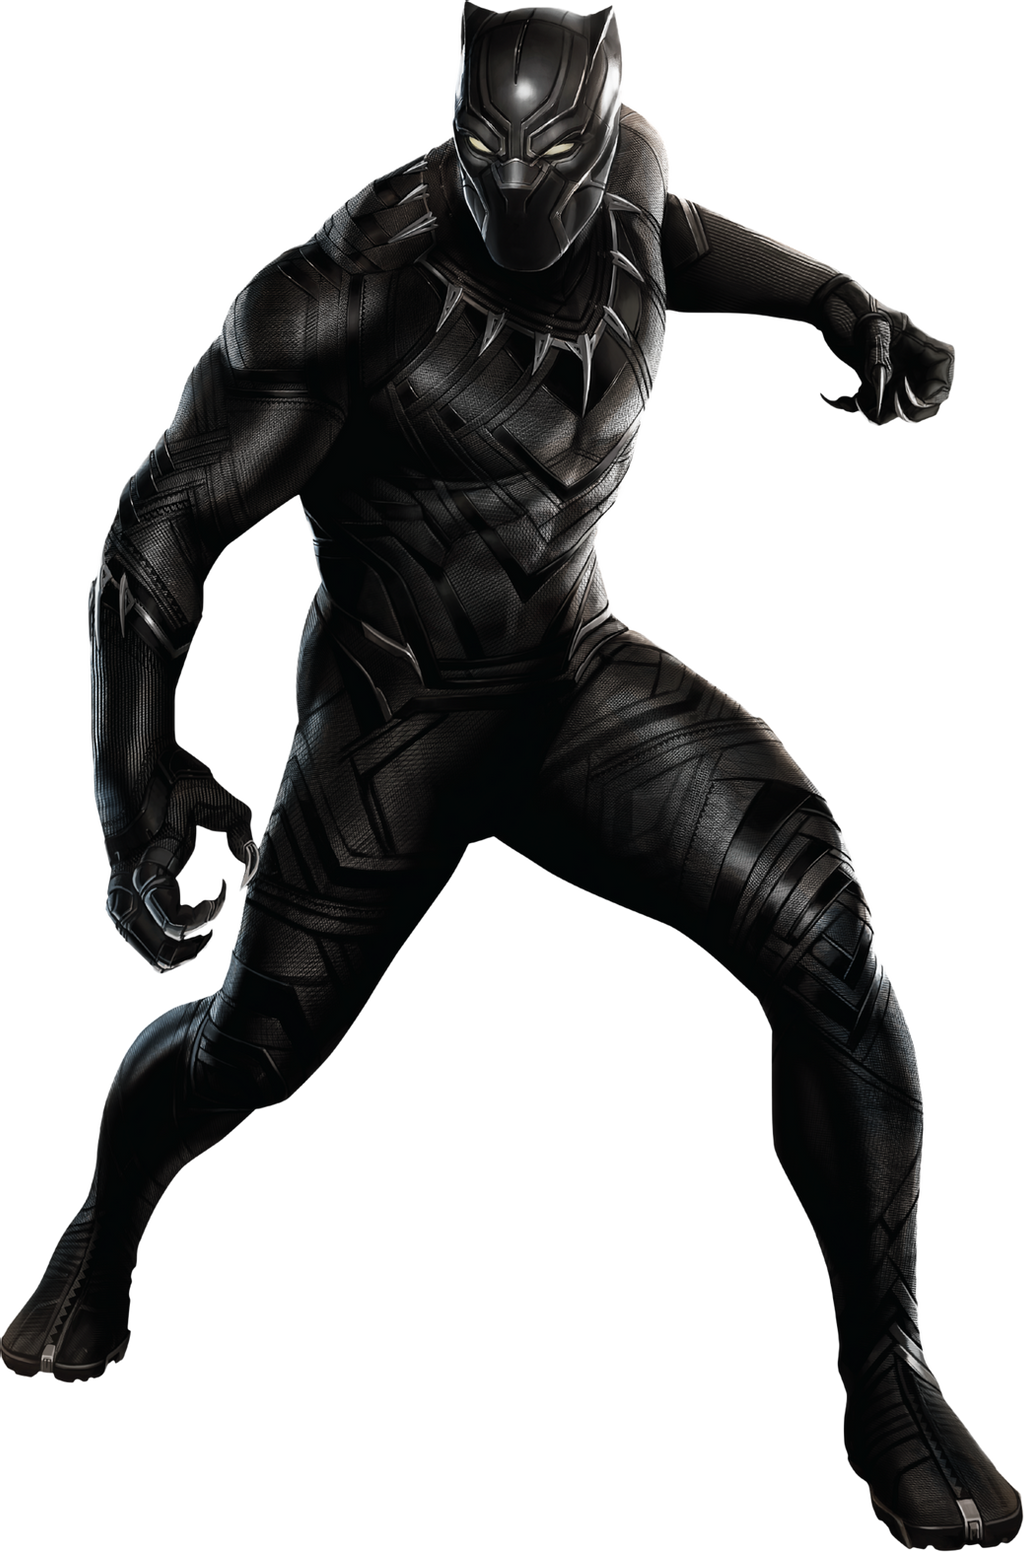 Marvel Black Panther PNG Transparant Beeld